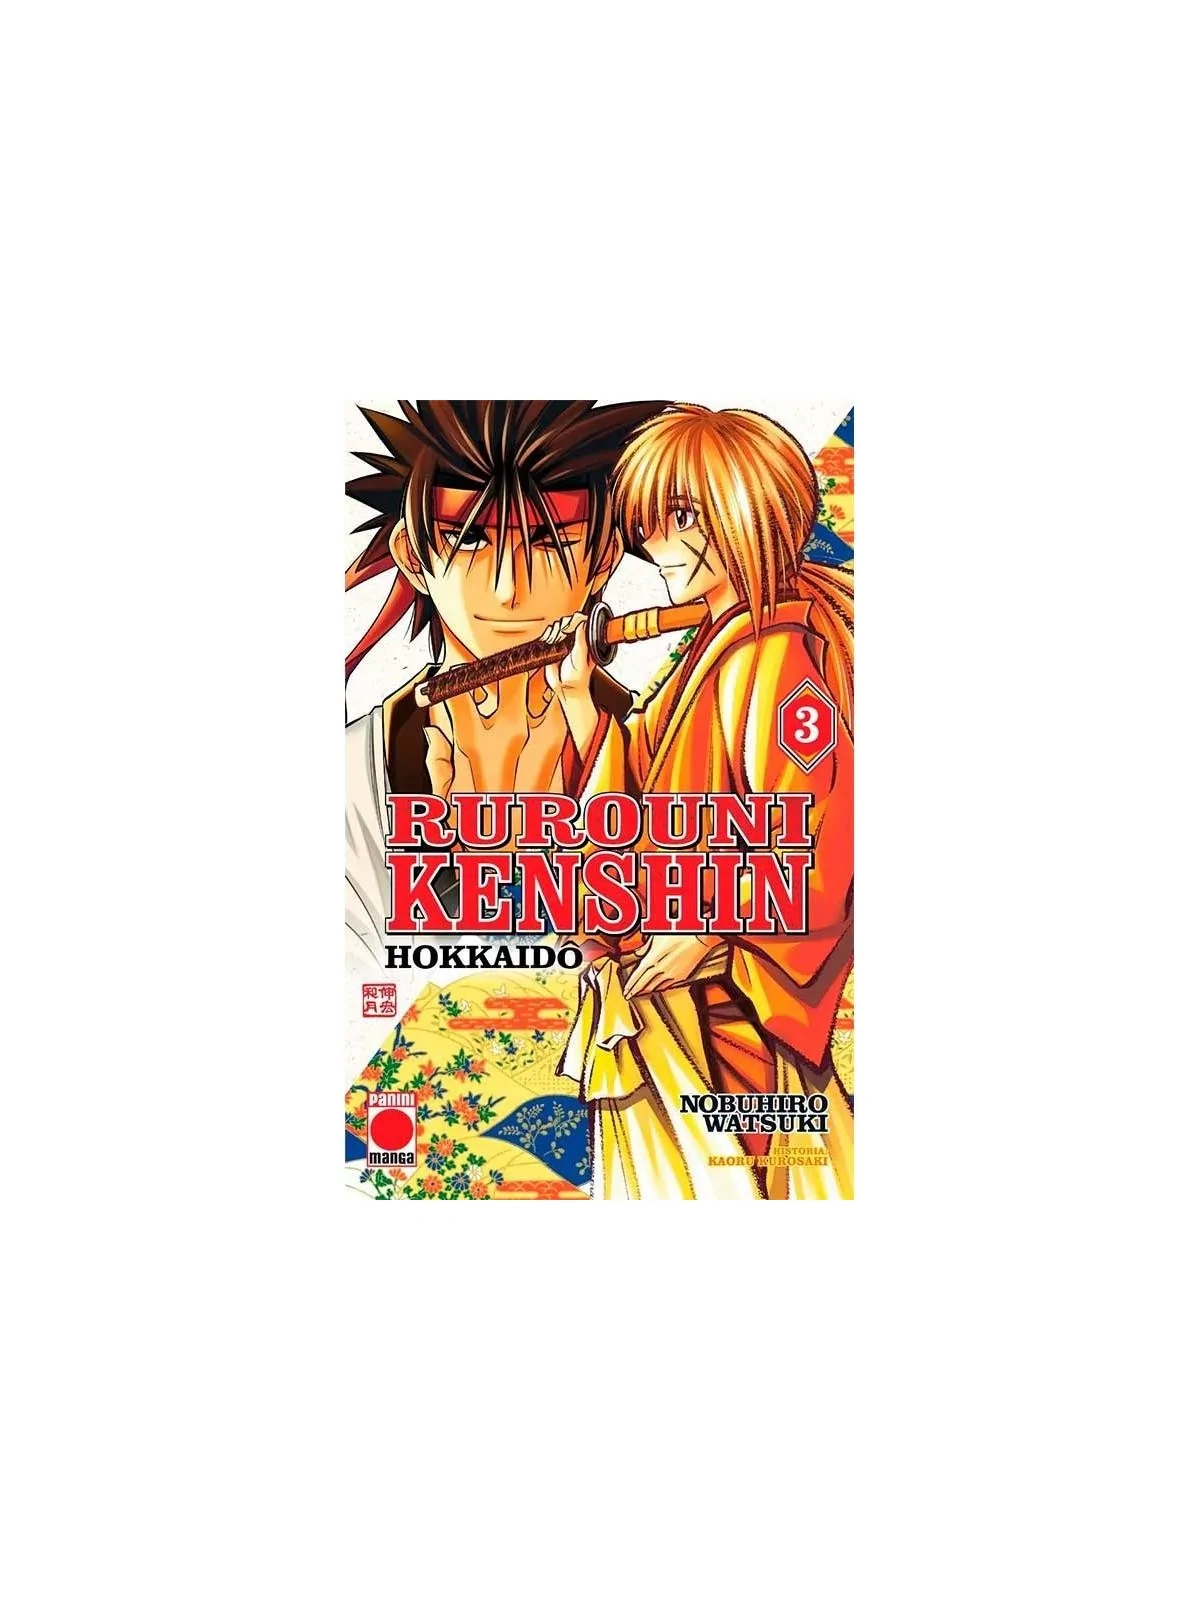 Comprar Rurouni Kenshin: Hokkaidô 03 barato al mejor precio 8,50 € de 